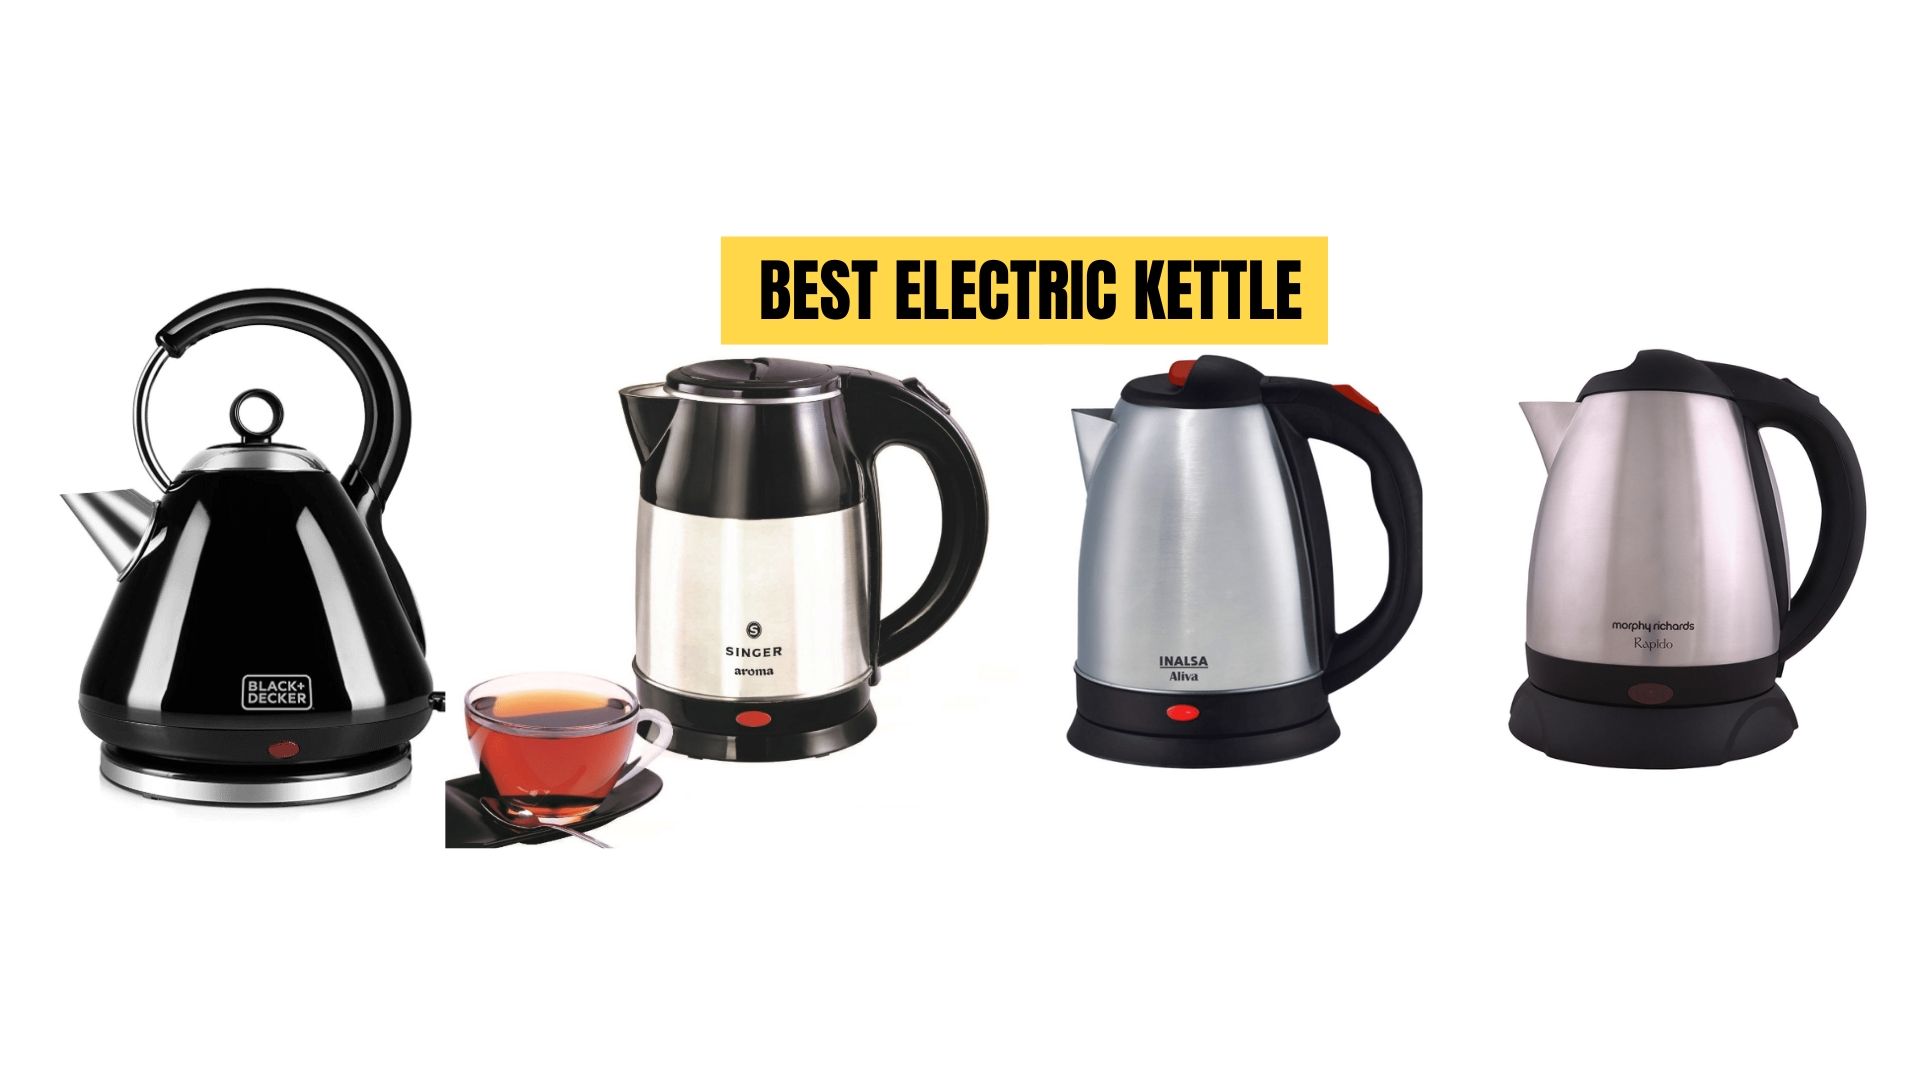 prestige electric kettle uses